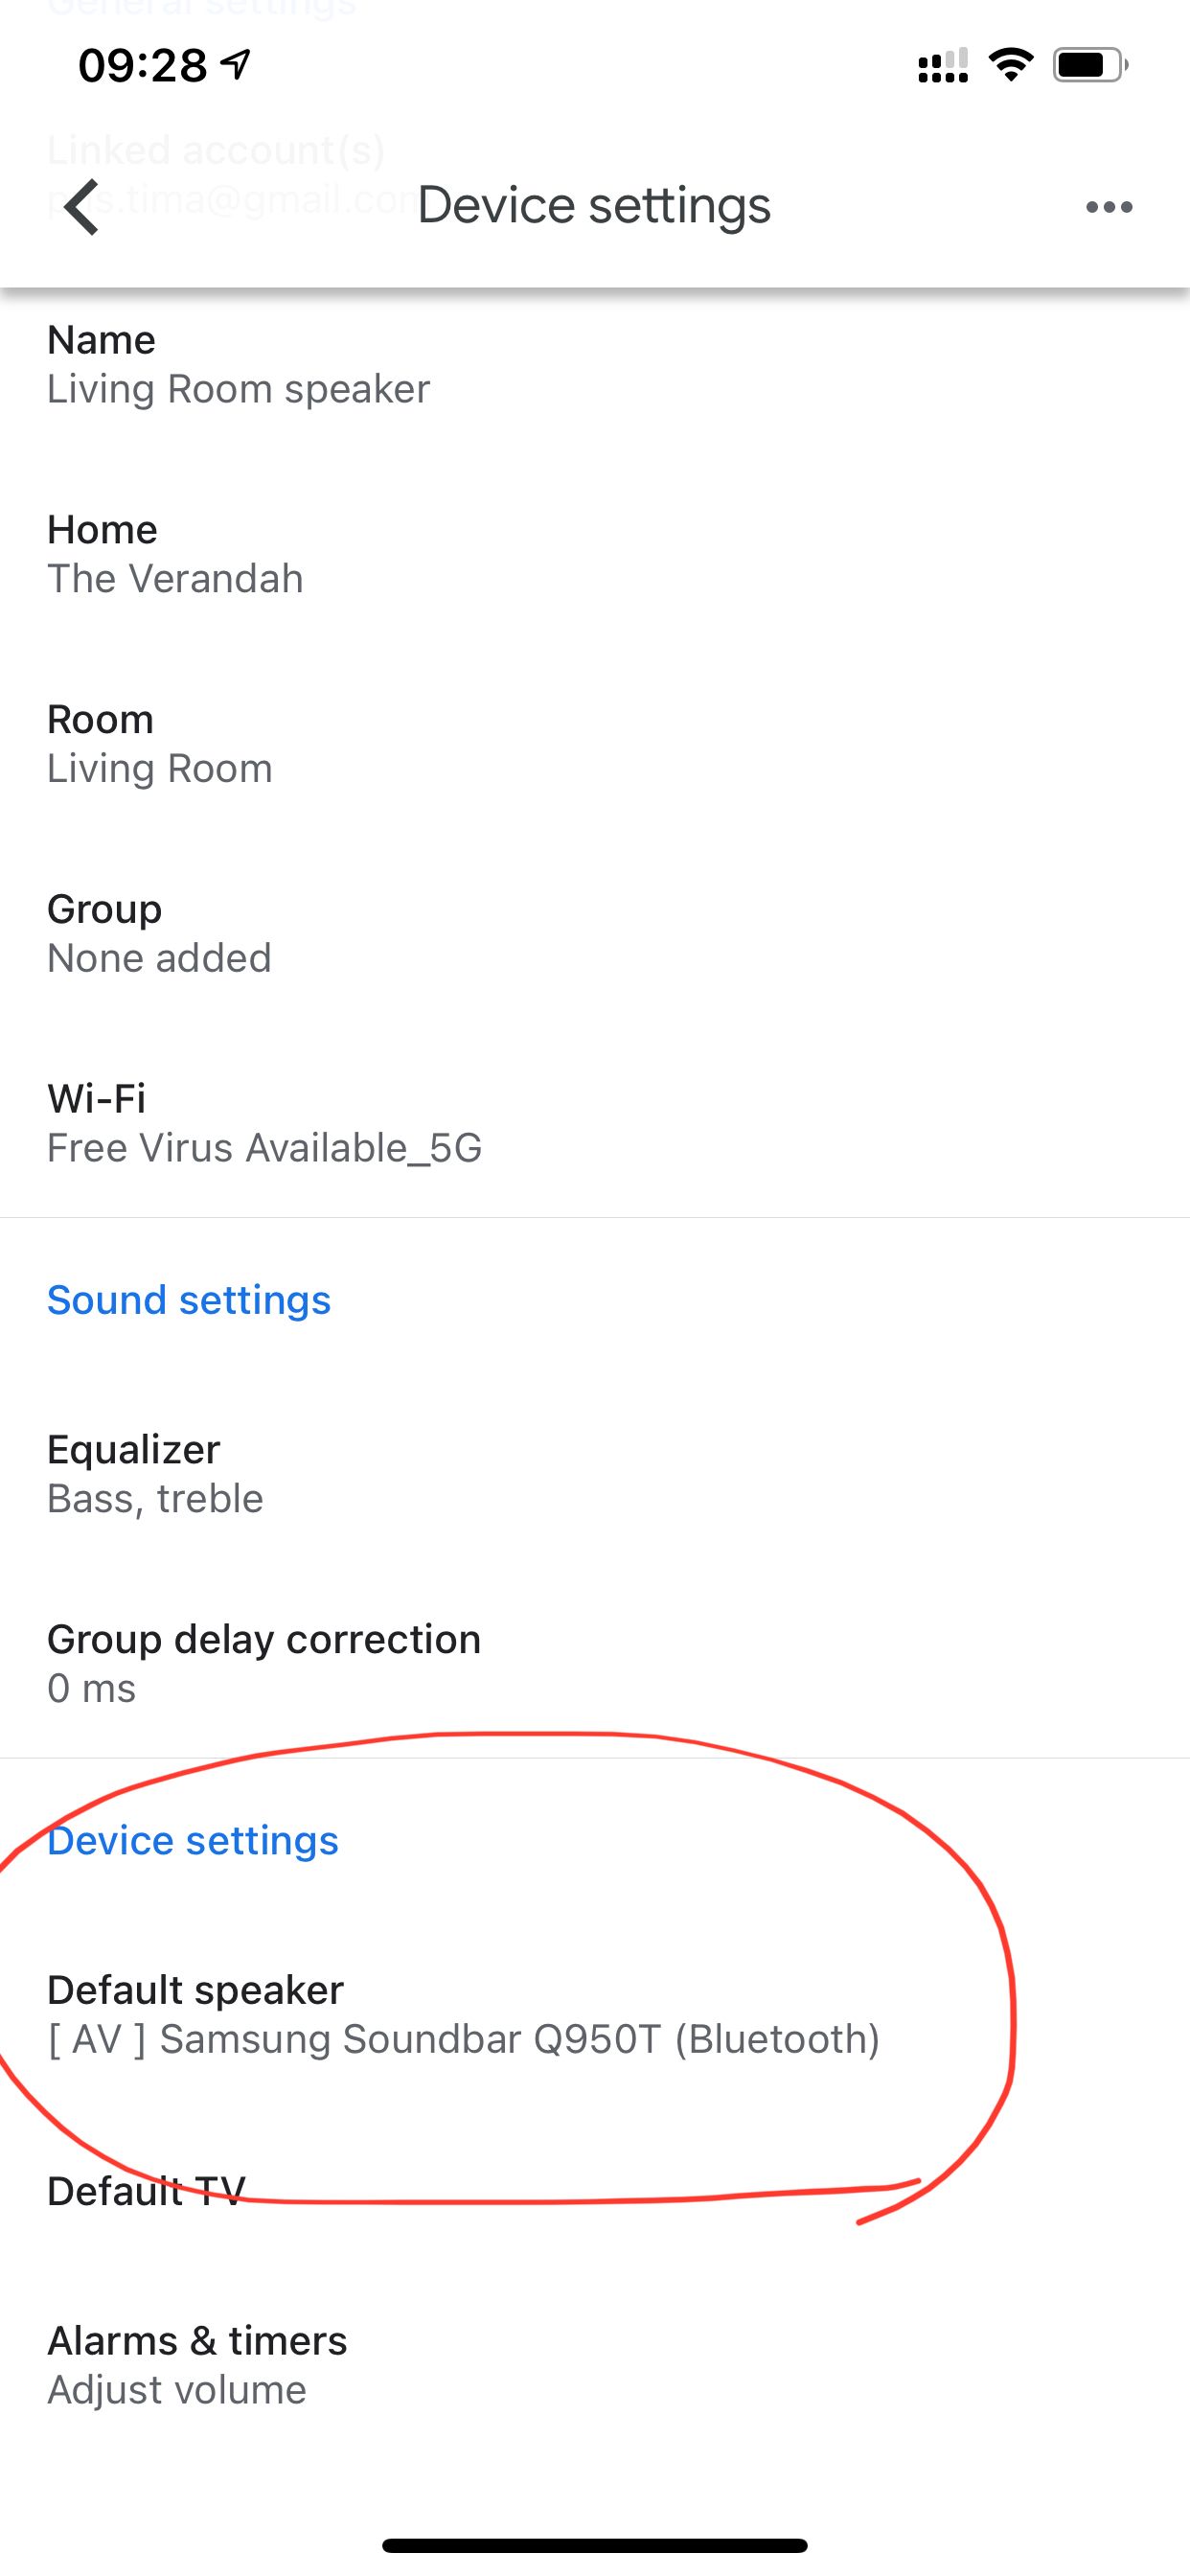 Why no google with sansung soundbar? - Samsung Community